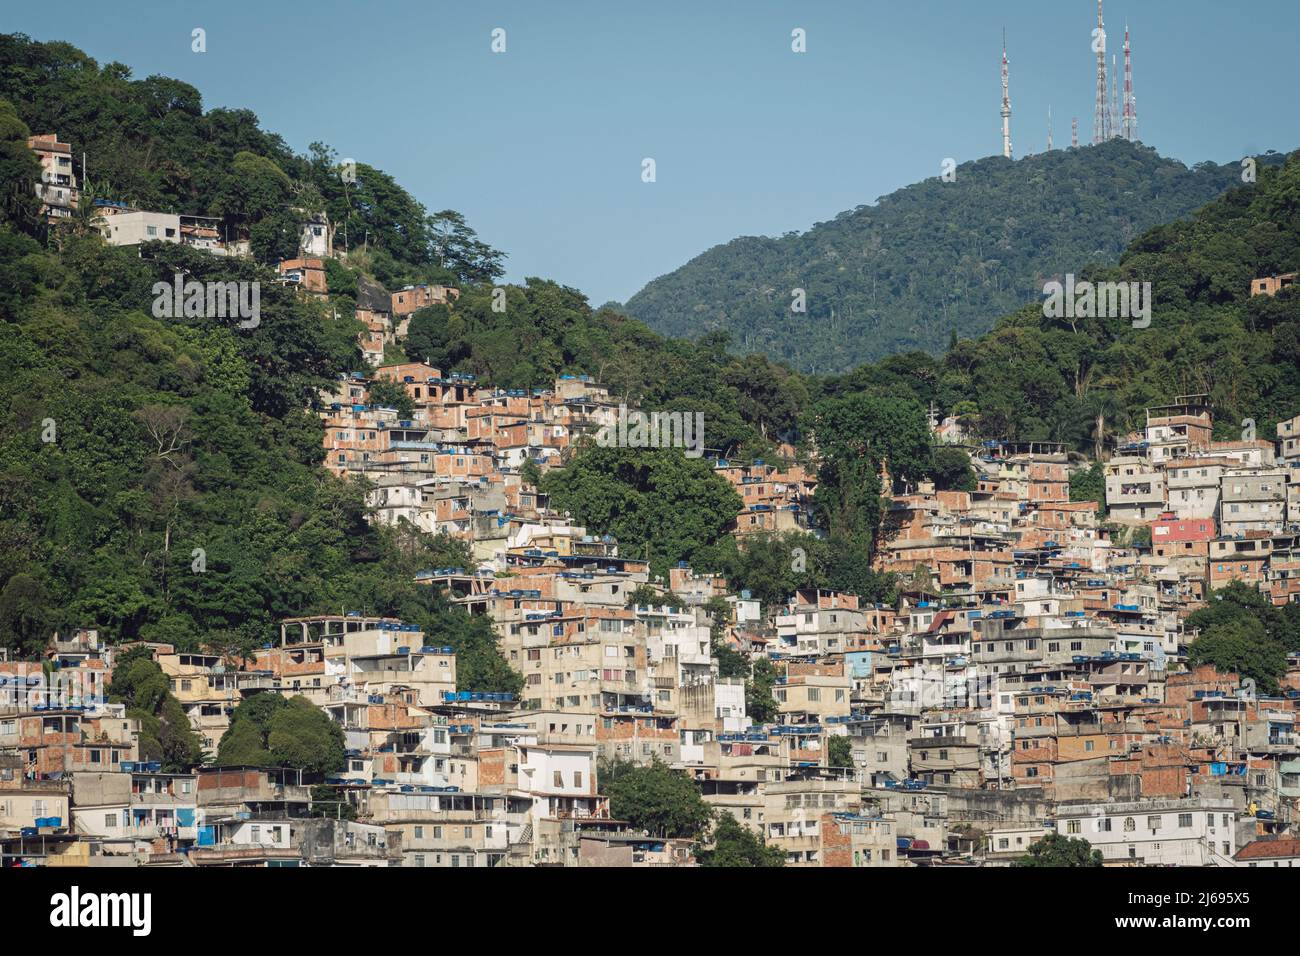 Tabajaras-Cabritos favela slum, impoverished community with poor housing, Tijuca National Park, Rio de Janeiro, Brazil Stock Photo